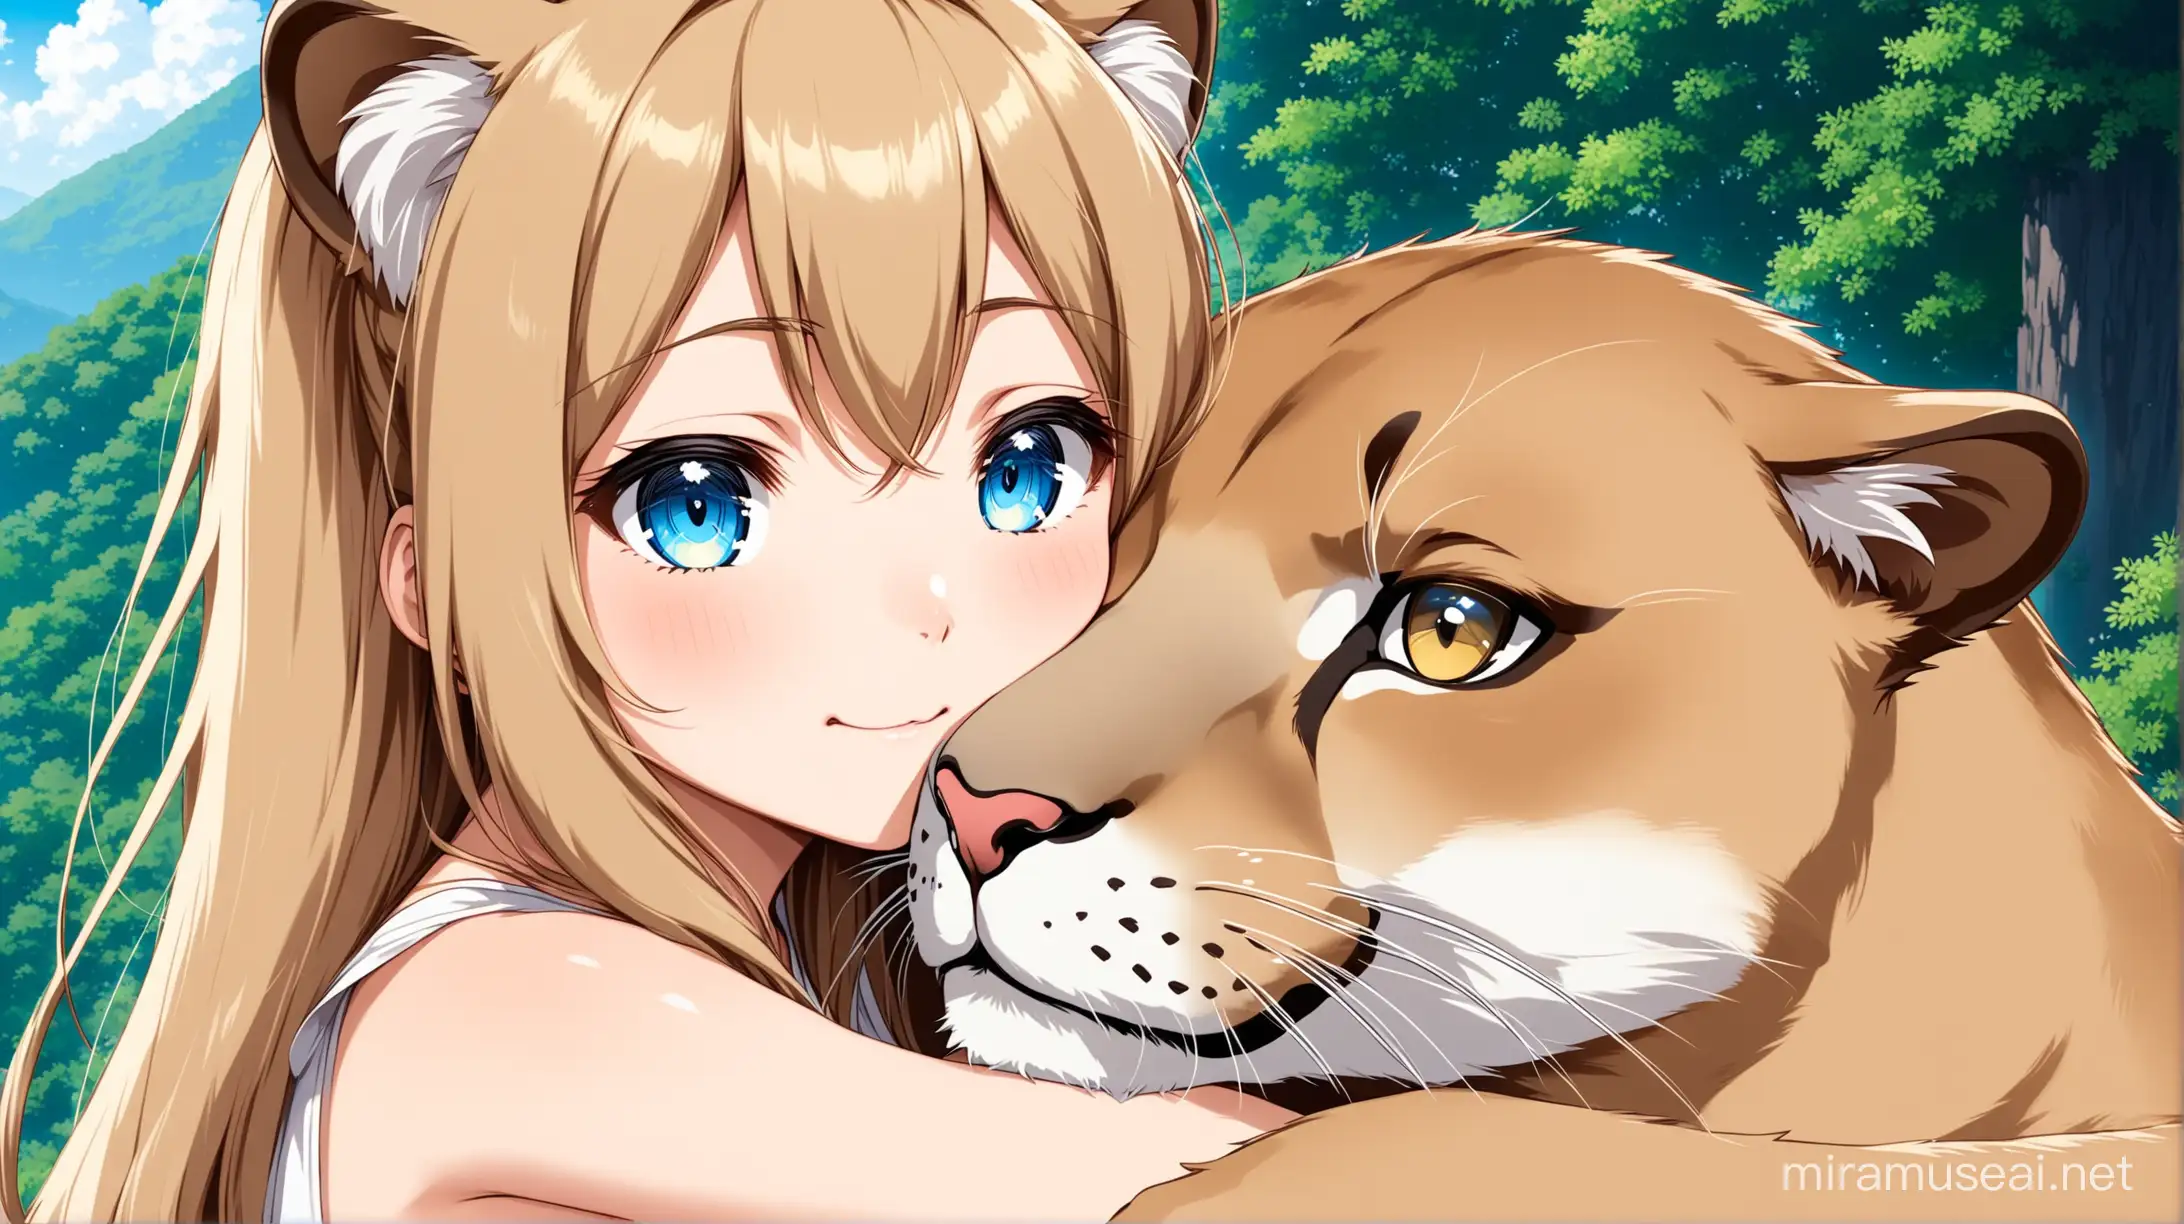 Affectionate Mountain Lion Embracing Anime Girl